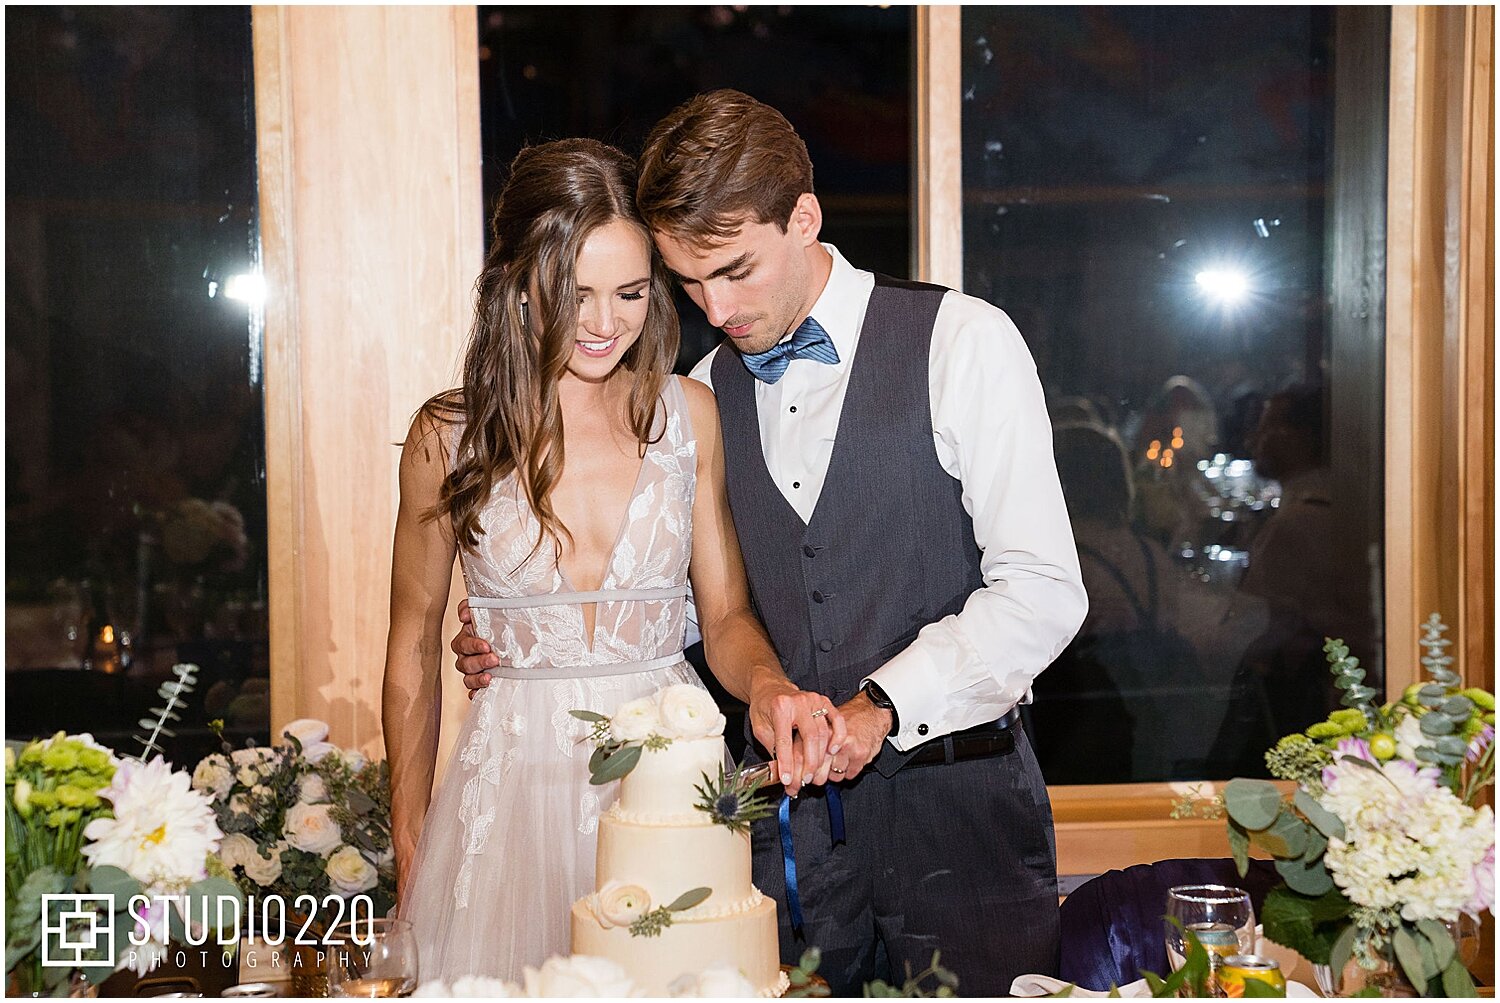  bride and groom cut their wedding cake  